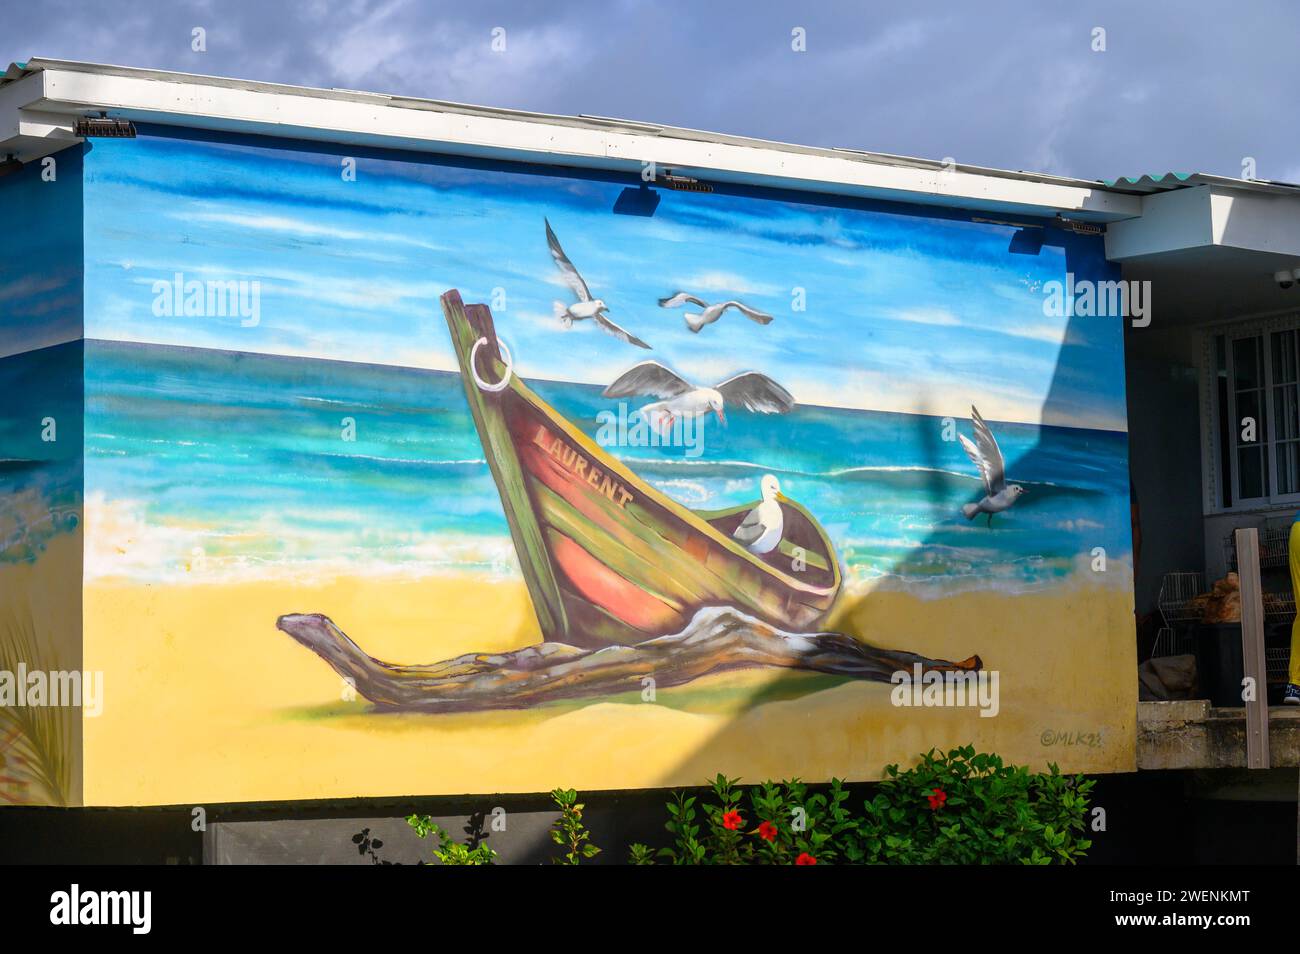 decoration art painting outside the seafood restaurant named laurent, varadero, cuba Stock Photo